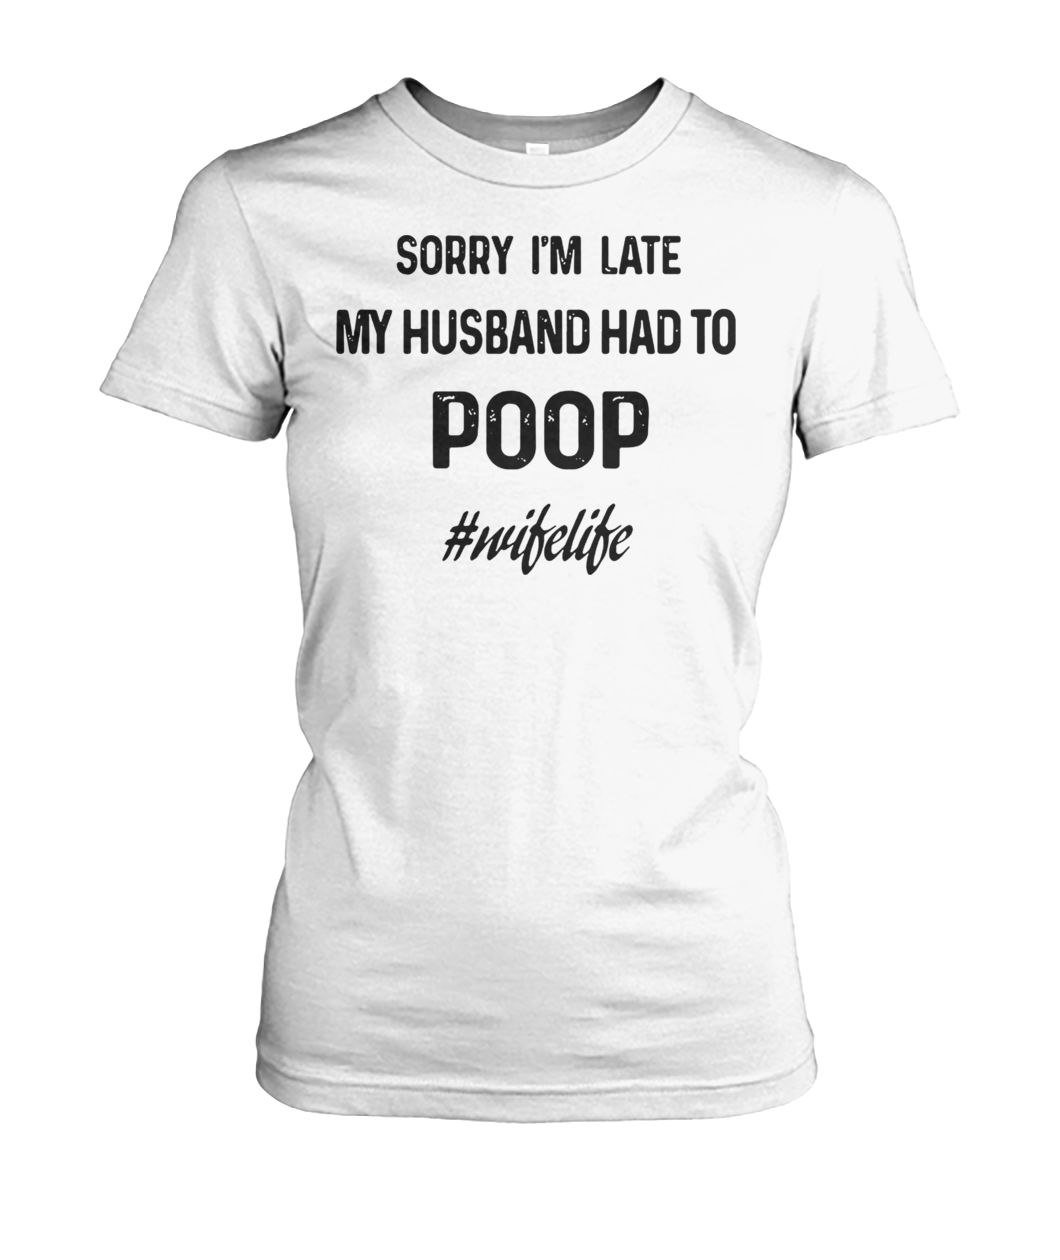 Sorry I'm late my husband had to poop wifelife women's crew tee